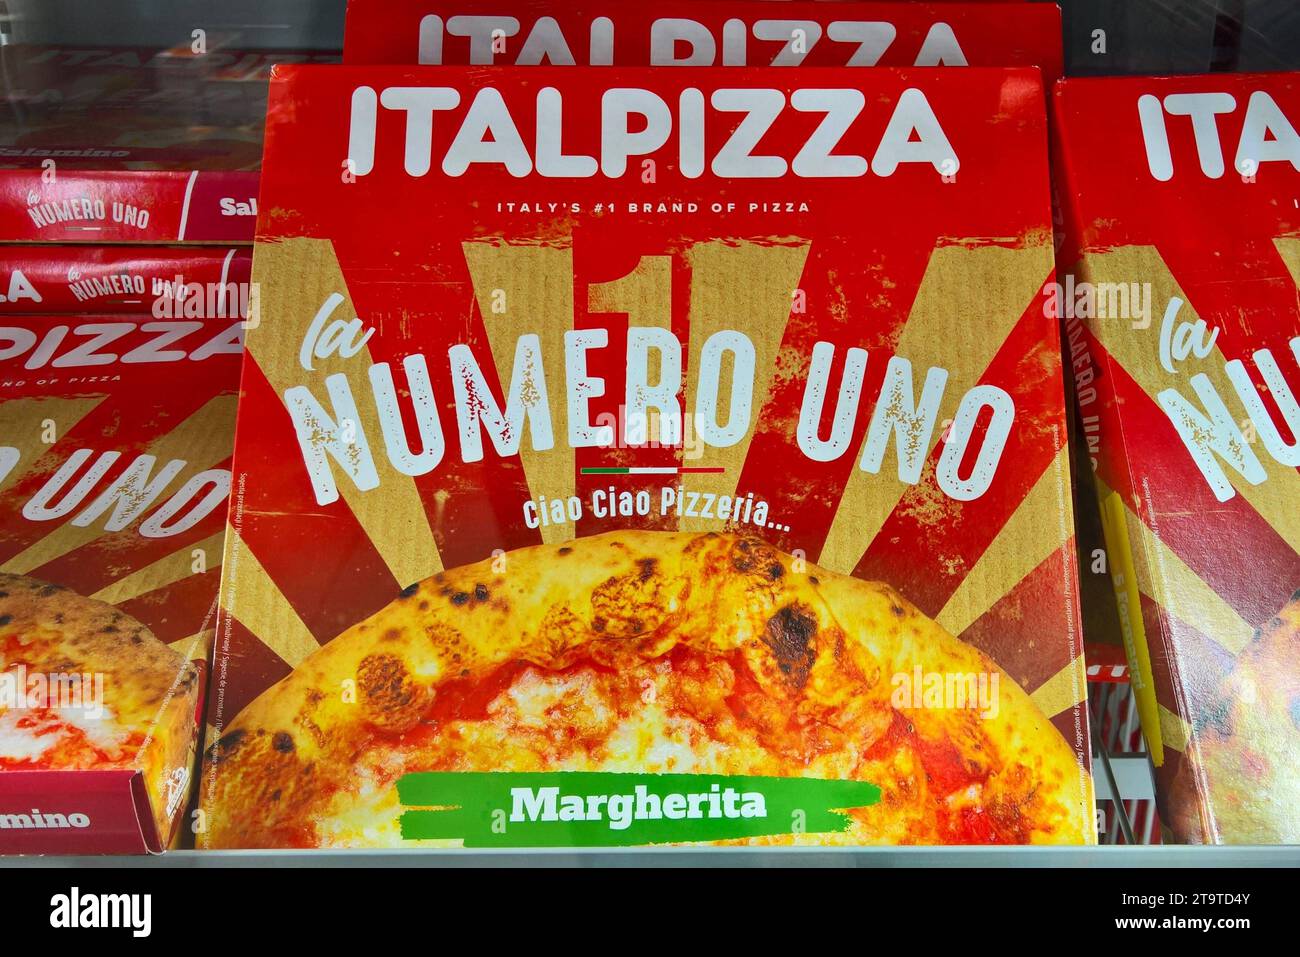 Italpizza, Ciao Ciao Pizzeria, TK Pizza, Tiefkühlkost. Die Italpizza GmbH hat ihren Firmensitz in Wiesbaden *** Italpizza, Ciao Ciao Pizzeria, frozen pizza, frozen food Italpizza GmbH is based in Wiesbaden, Germany Credit: Imago/Alamy Live News Stock Photo